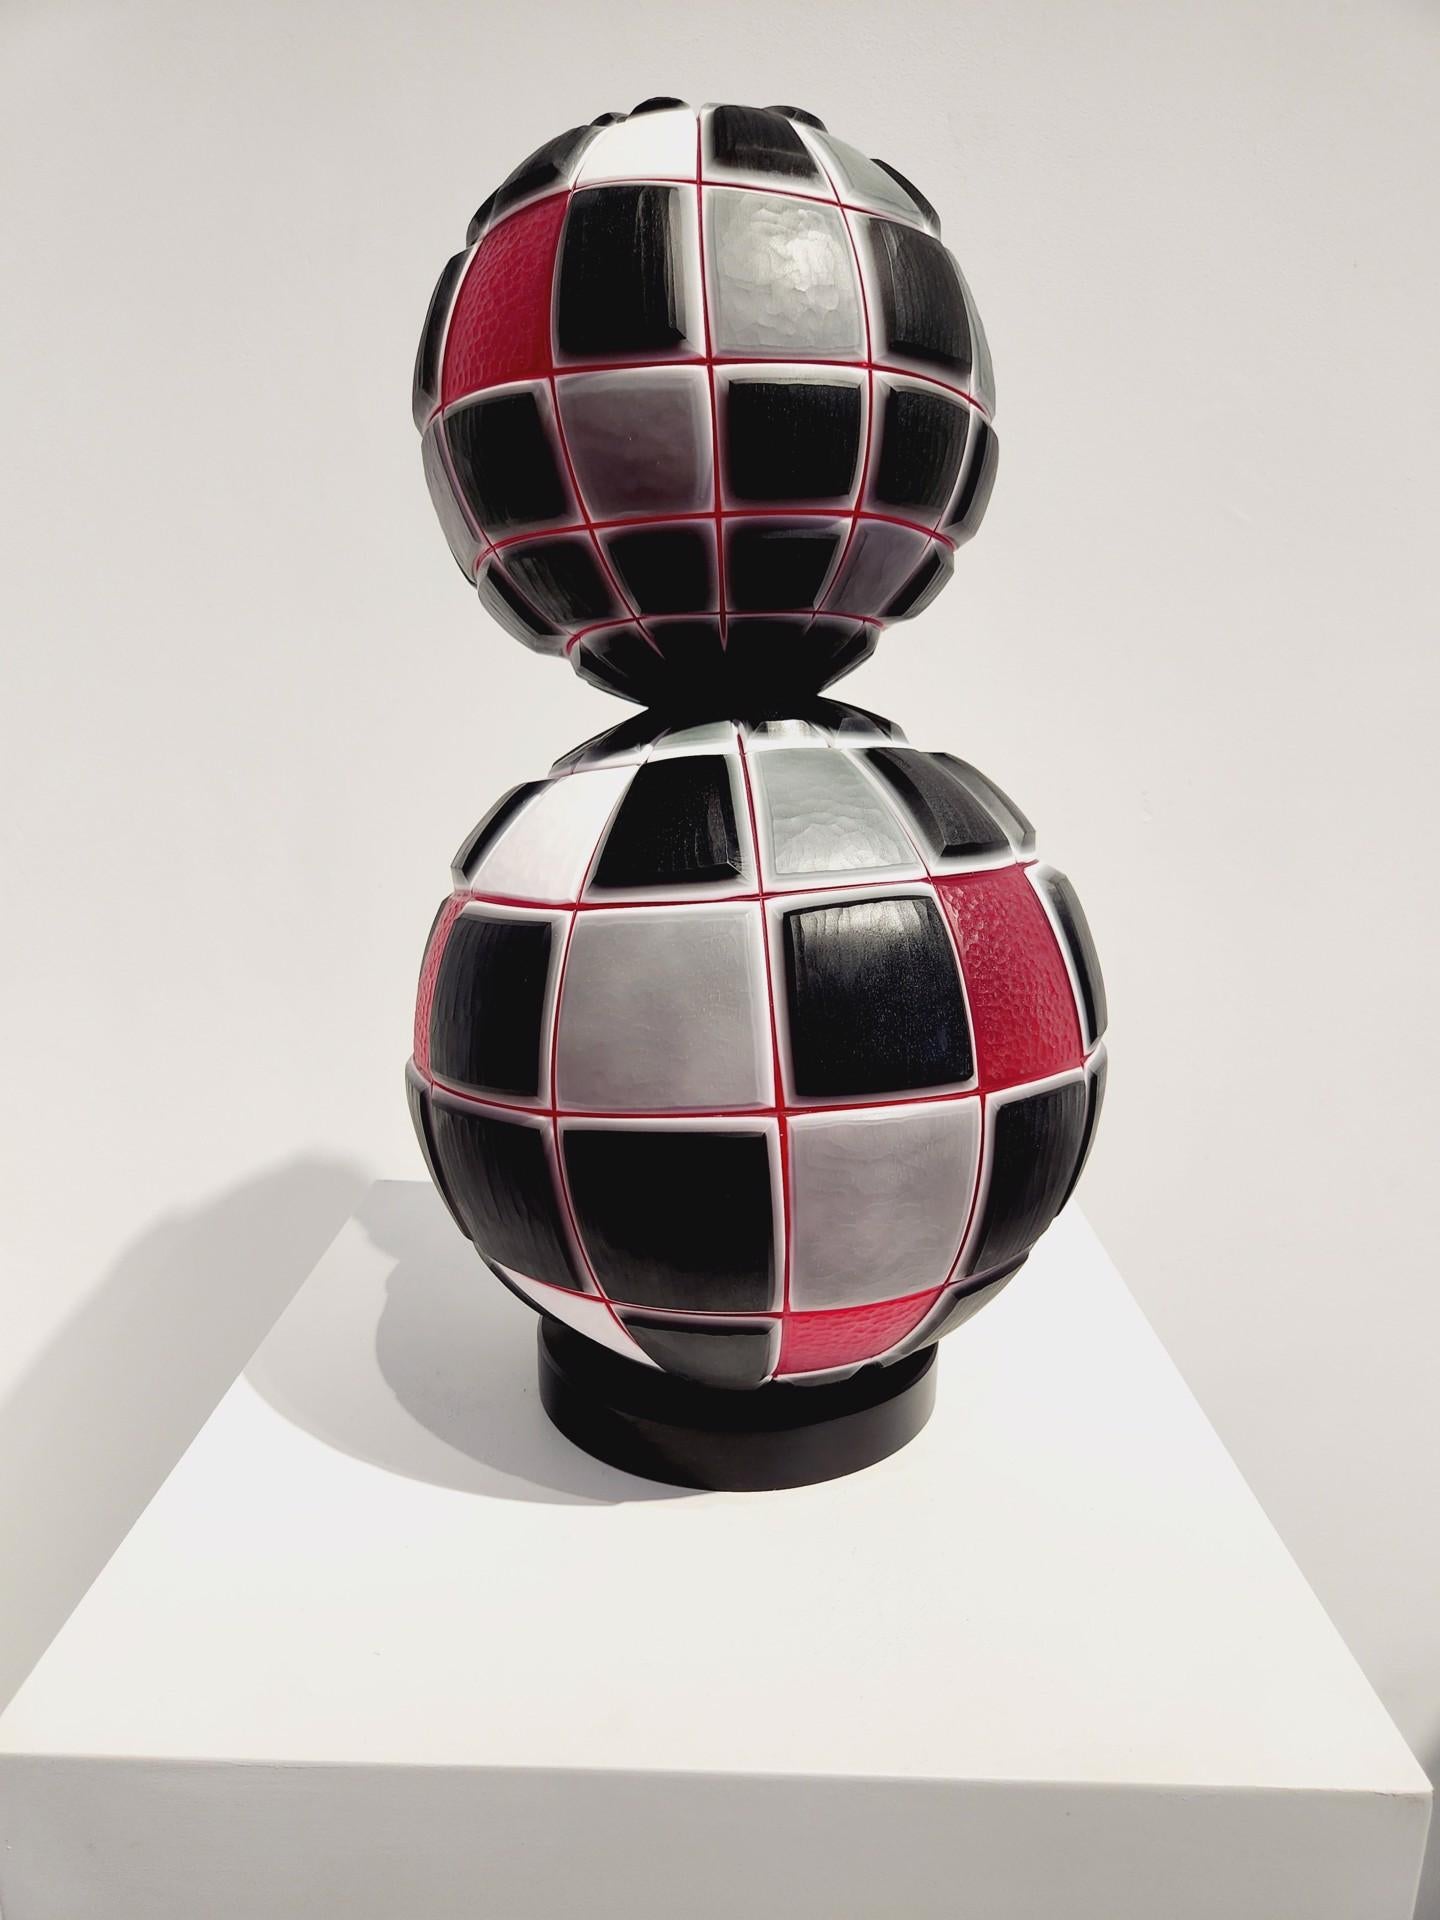 2 Spheres- Murano Glass - Contemporary Art by Pietro & Riccardo Ferro